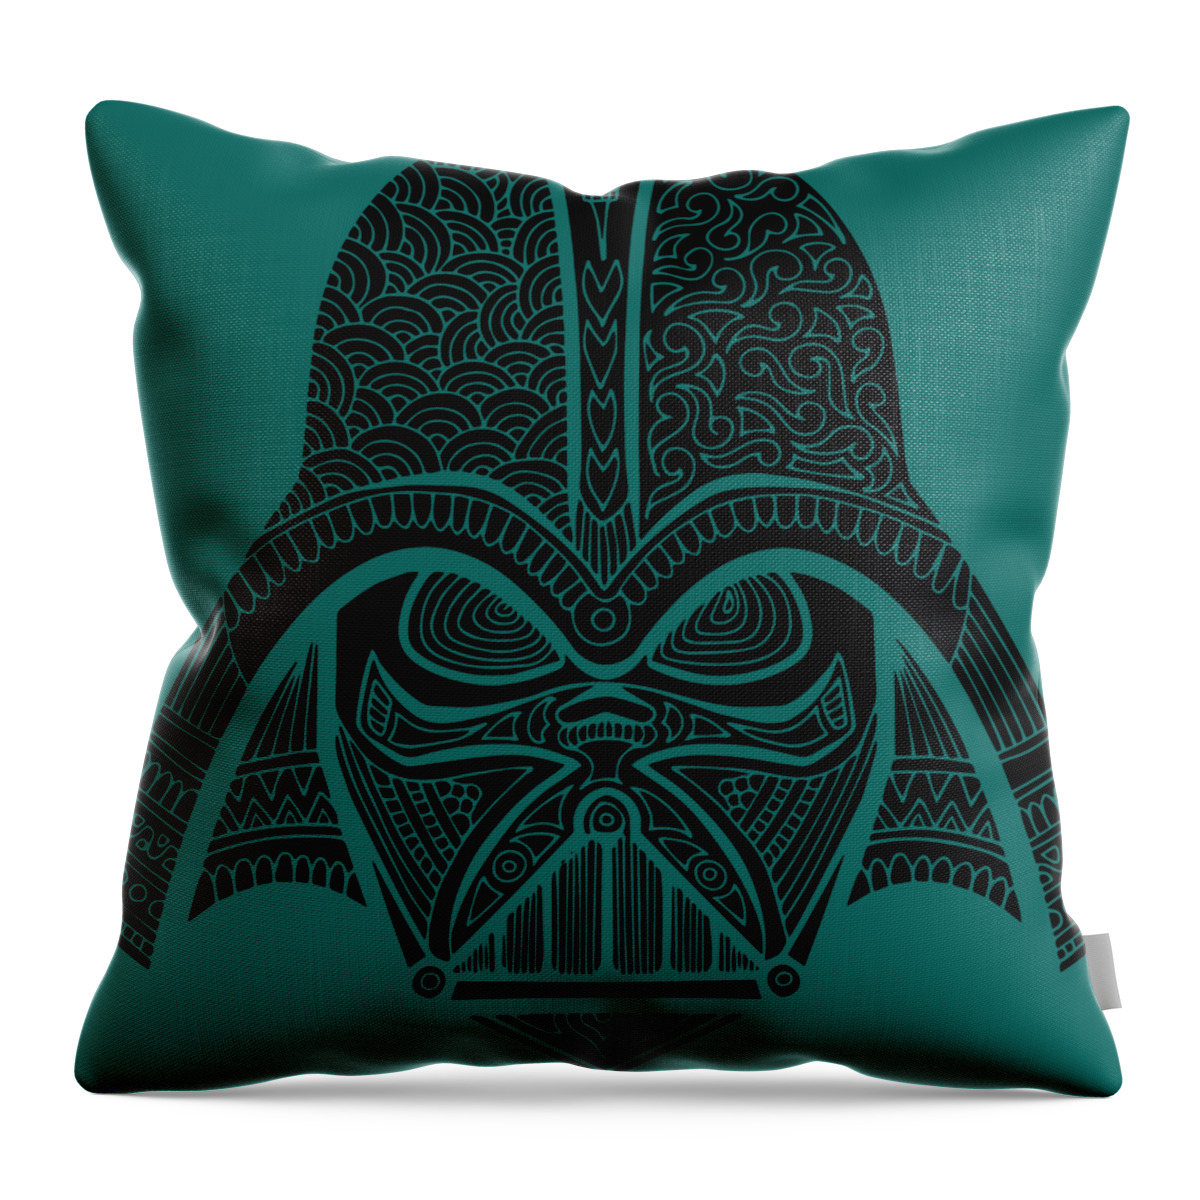 Darth Vader Throw Pillow featuring the mixed media Darth Vader - Star Wars Art - Blue Black by Studio Grafiikka